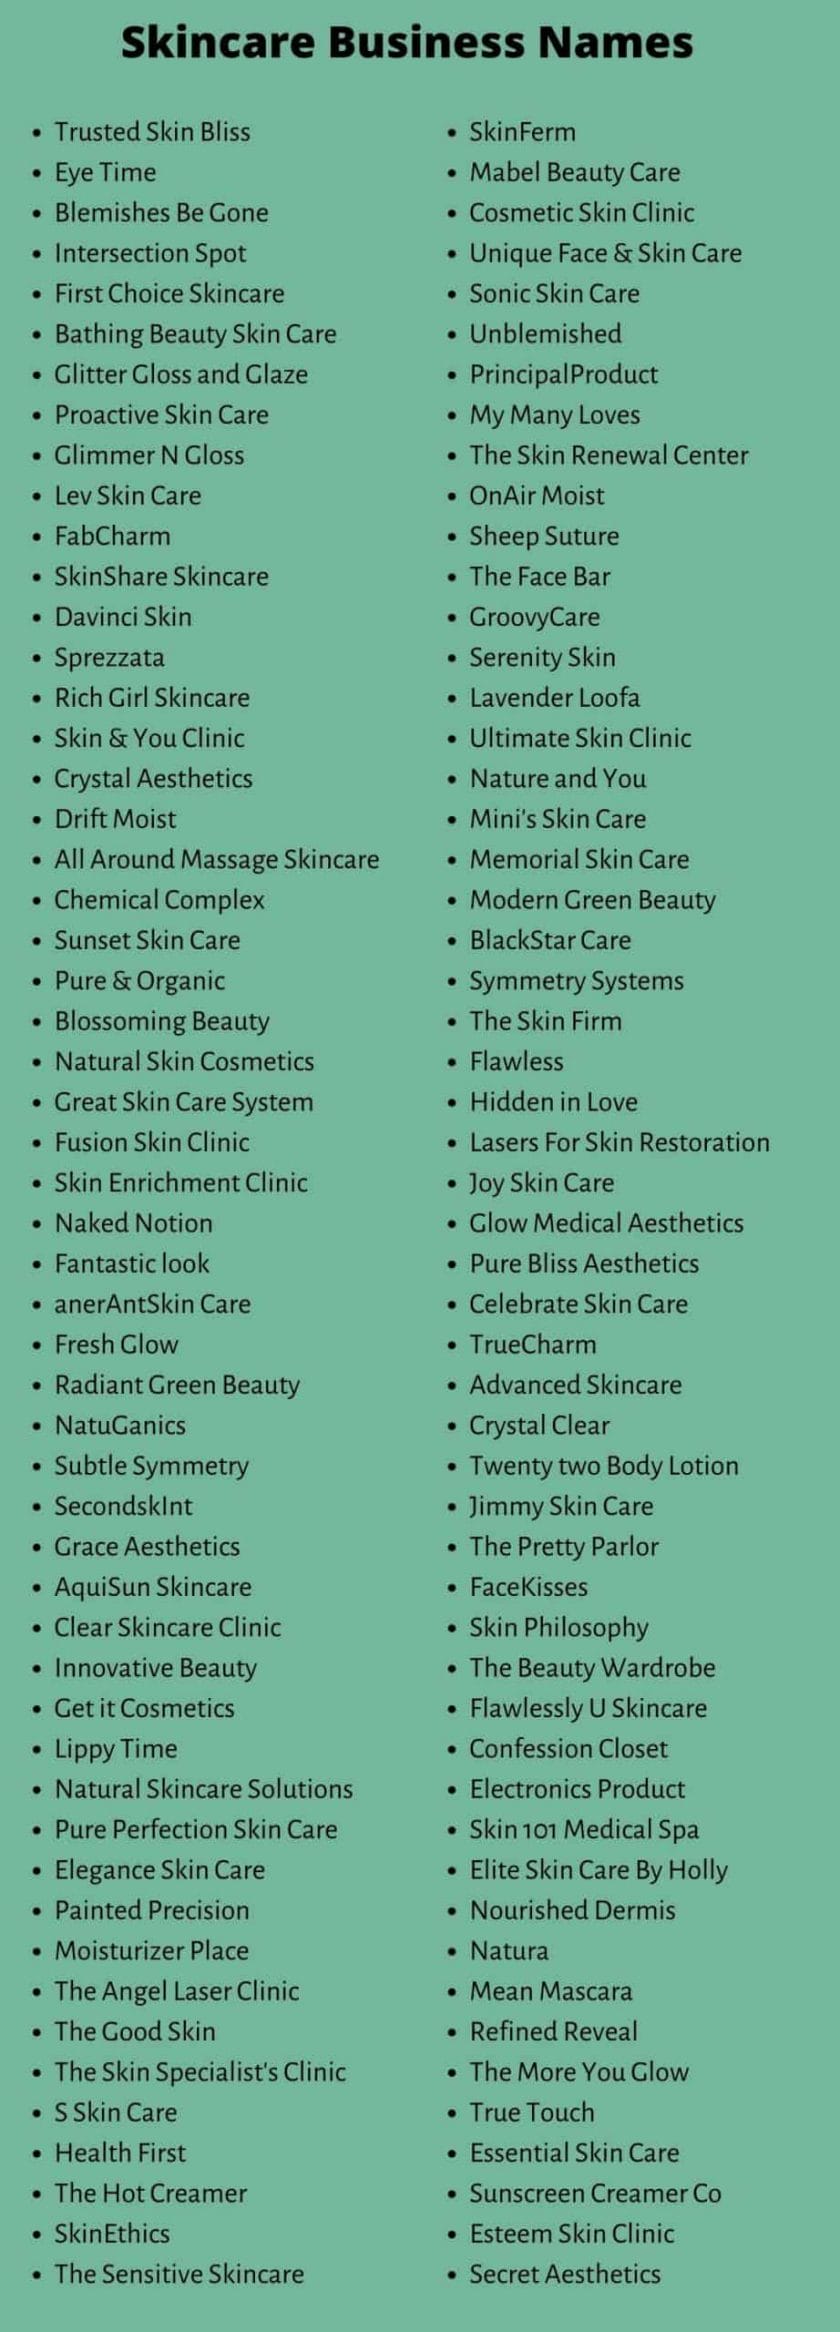 Skincare Business Names